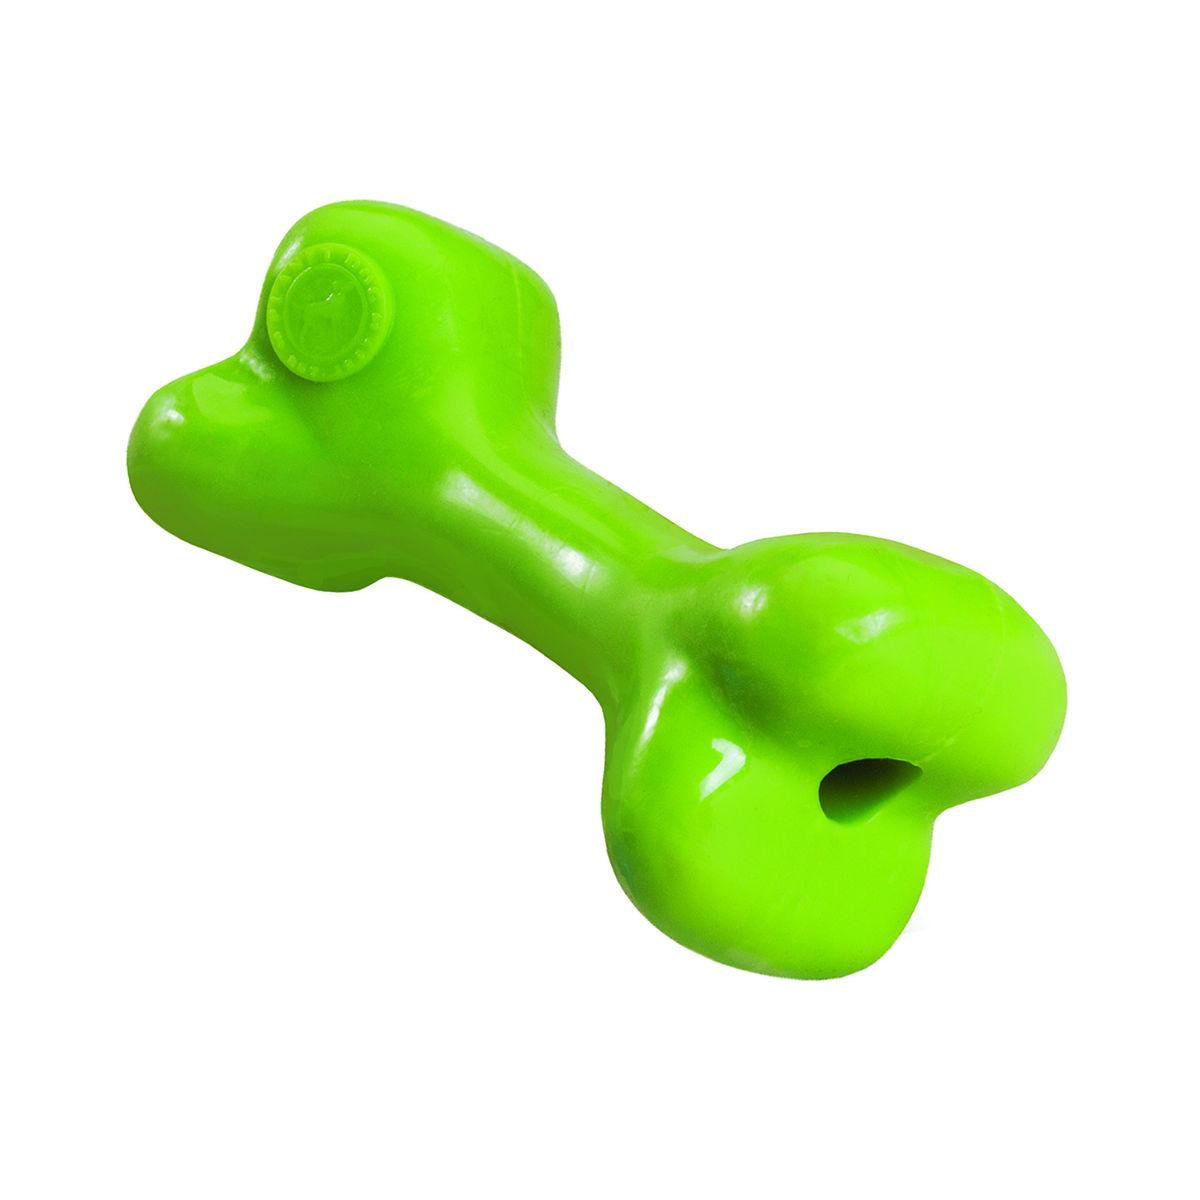 Planet Dog Orbee-Tuff Bone Dog Toy - Green